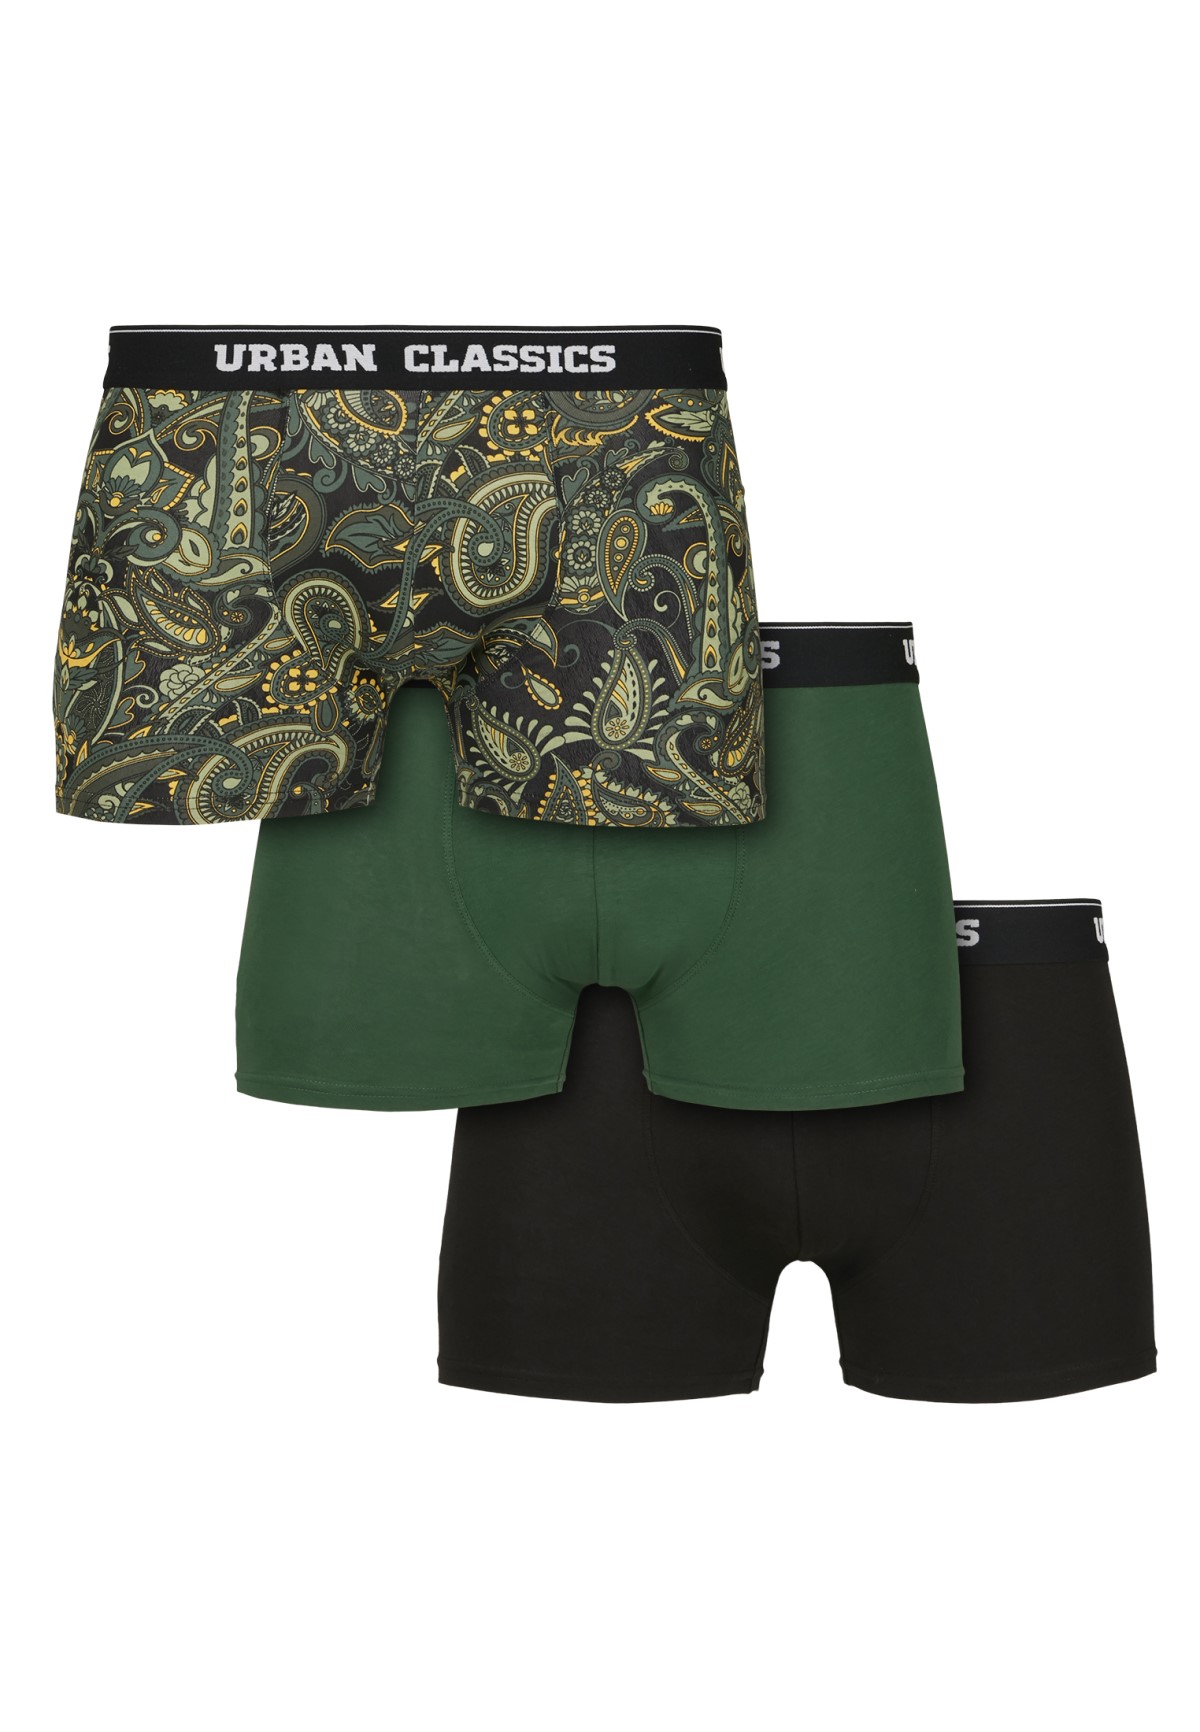 URBAN CLASSICS Boxer Shorts 3-Pack (SALE) grün schwarz Dschungel XXL